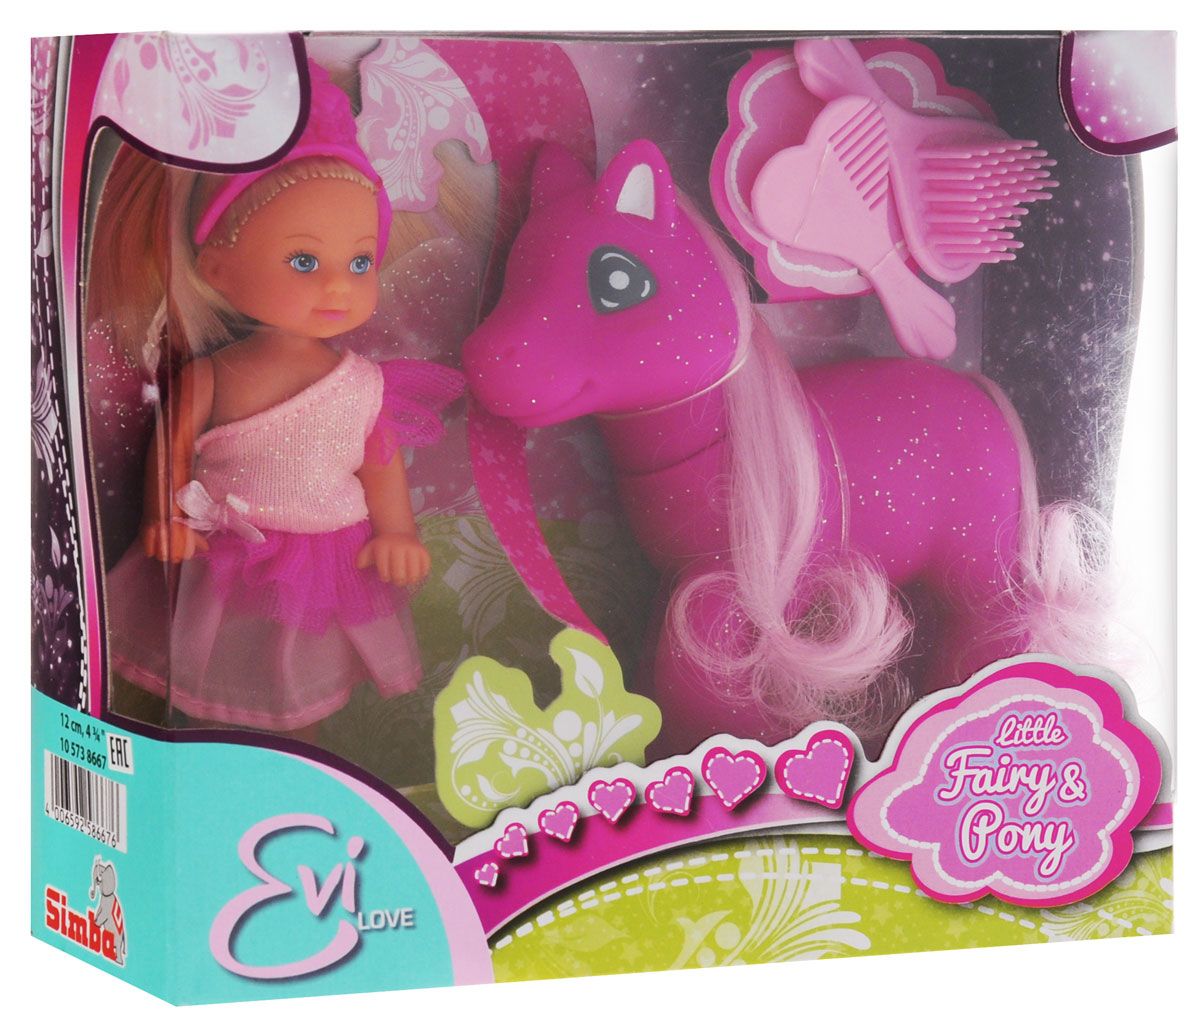 Simba   Little Fairy & Pony  